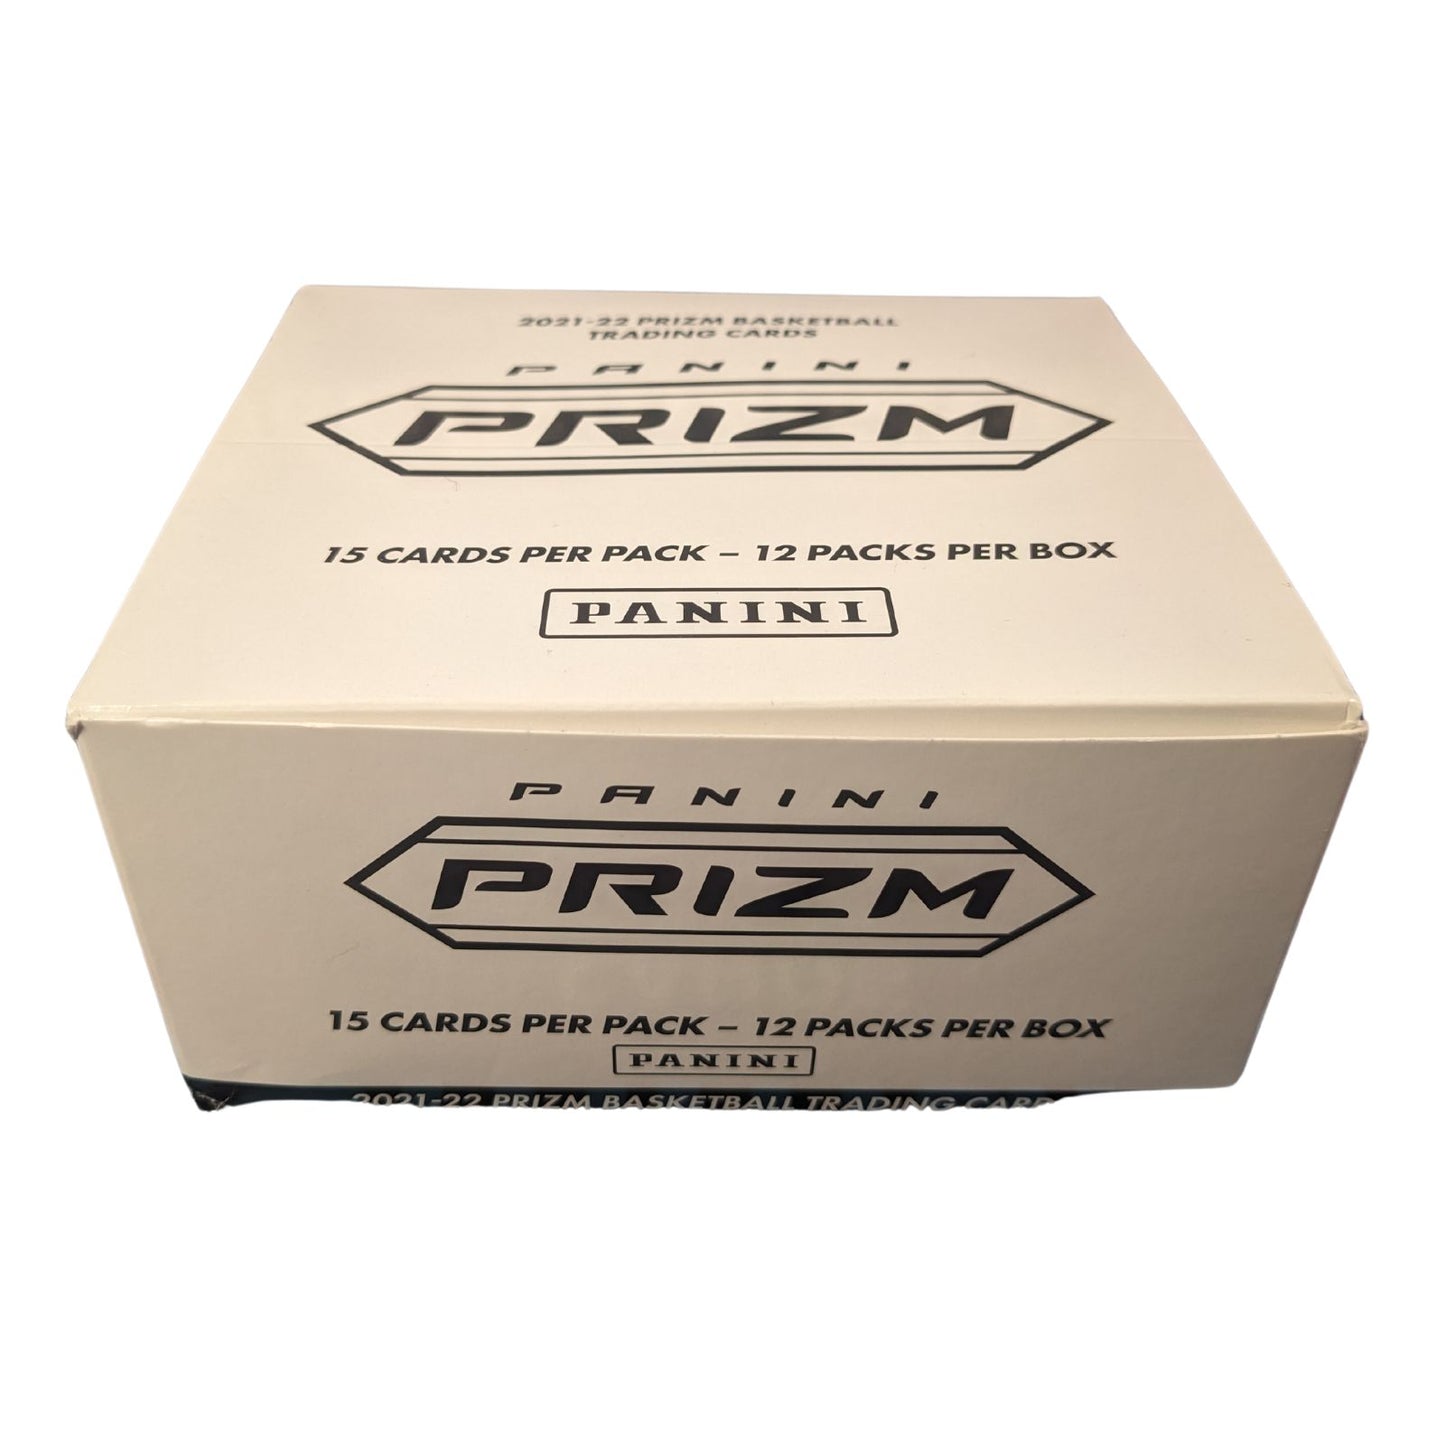 2021-22 Panini Prizm Basketball Cello / Value Pack Box (12 Packs)